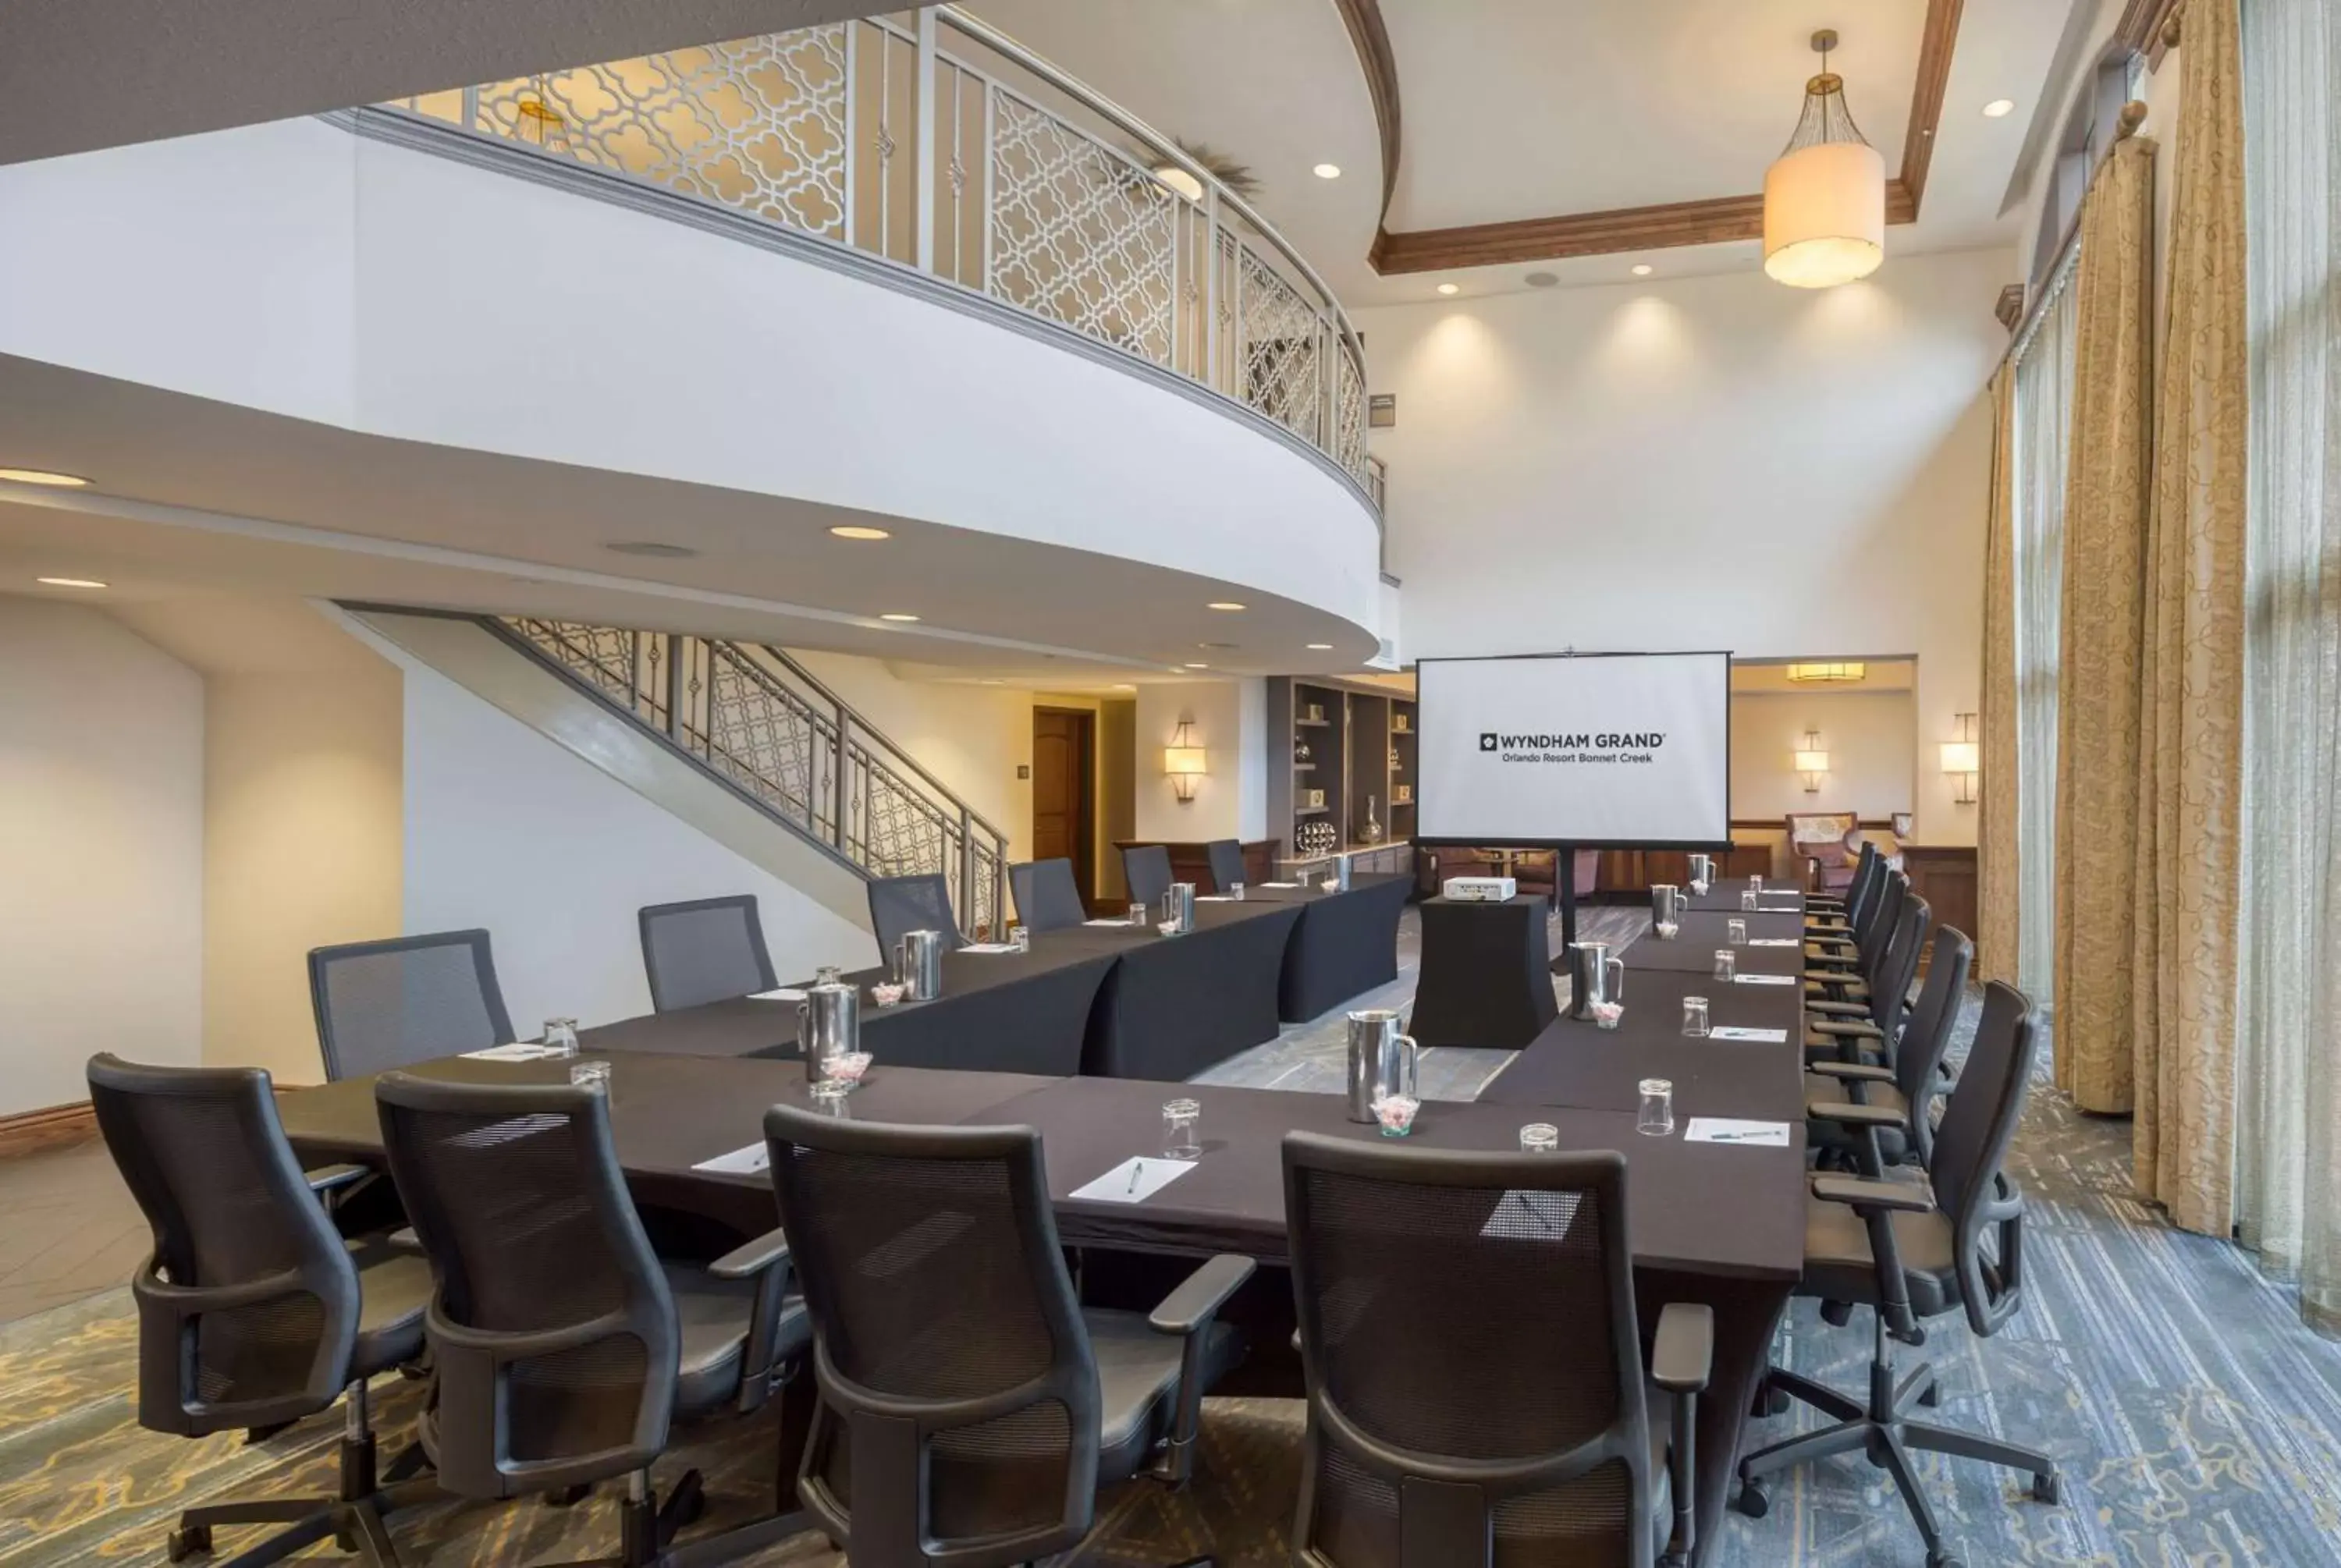 Meeting/conference room in Wyndham Grand Orlando Resort Bonnet Creek